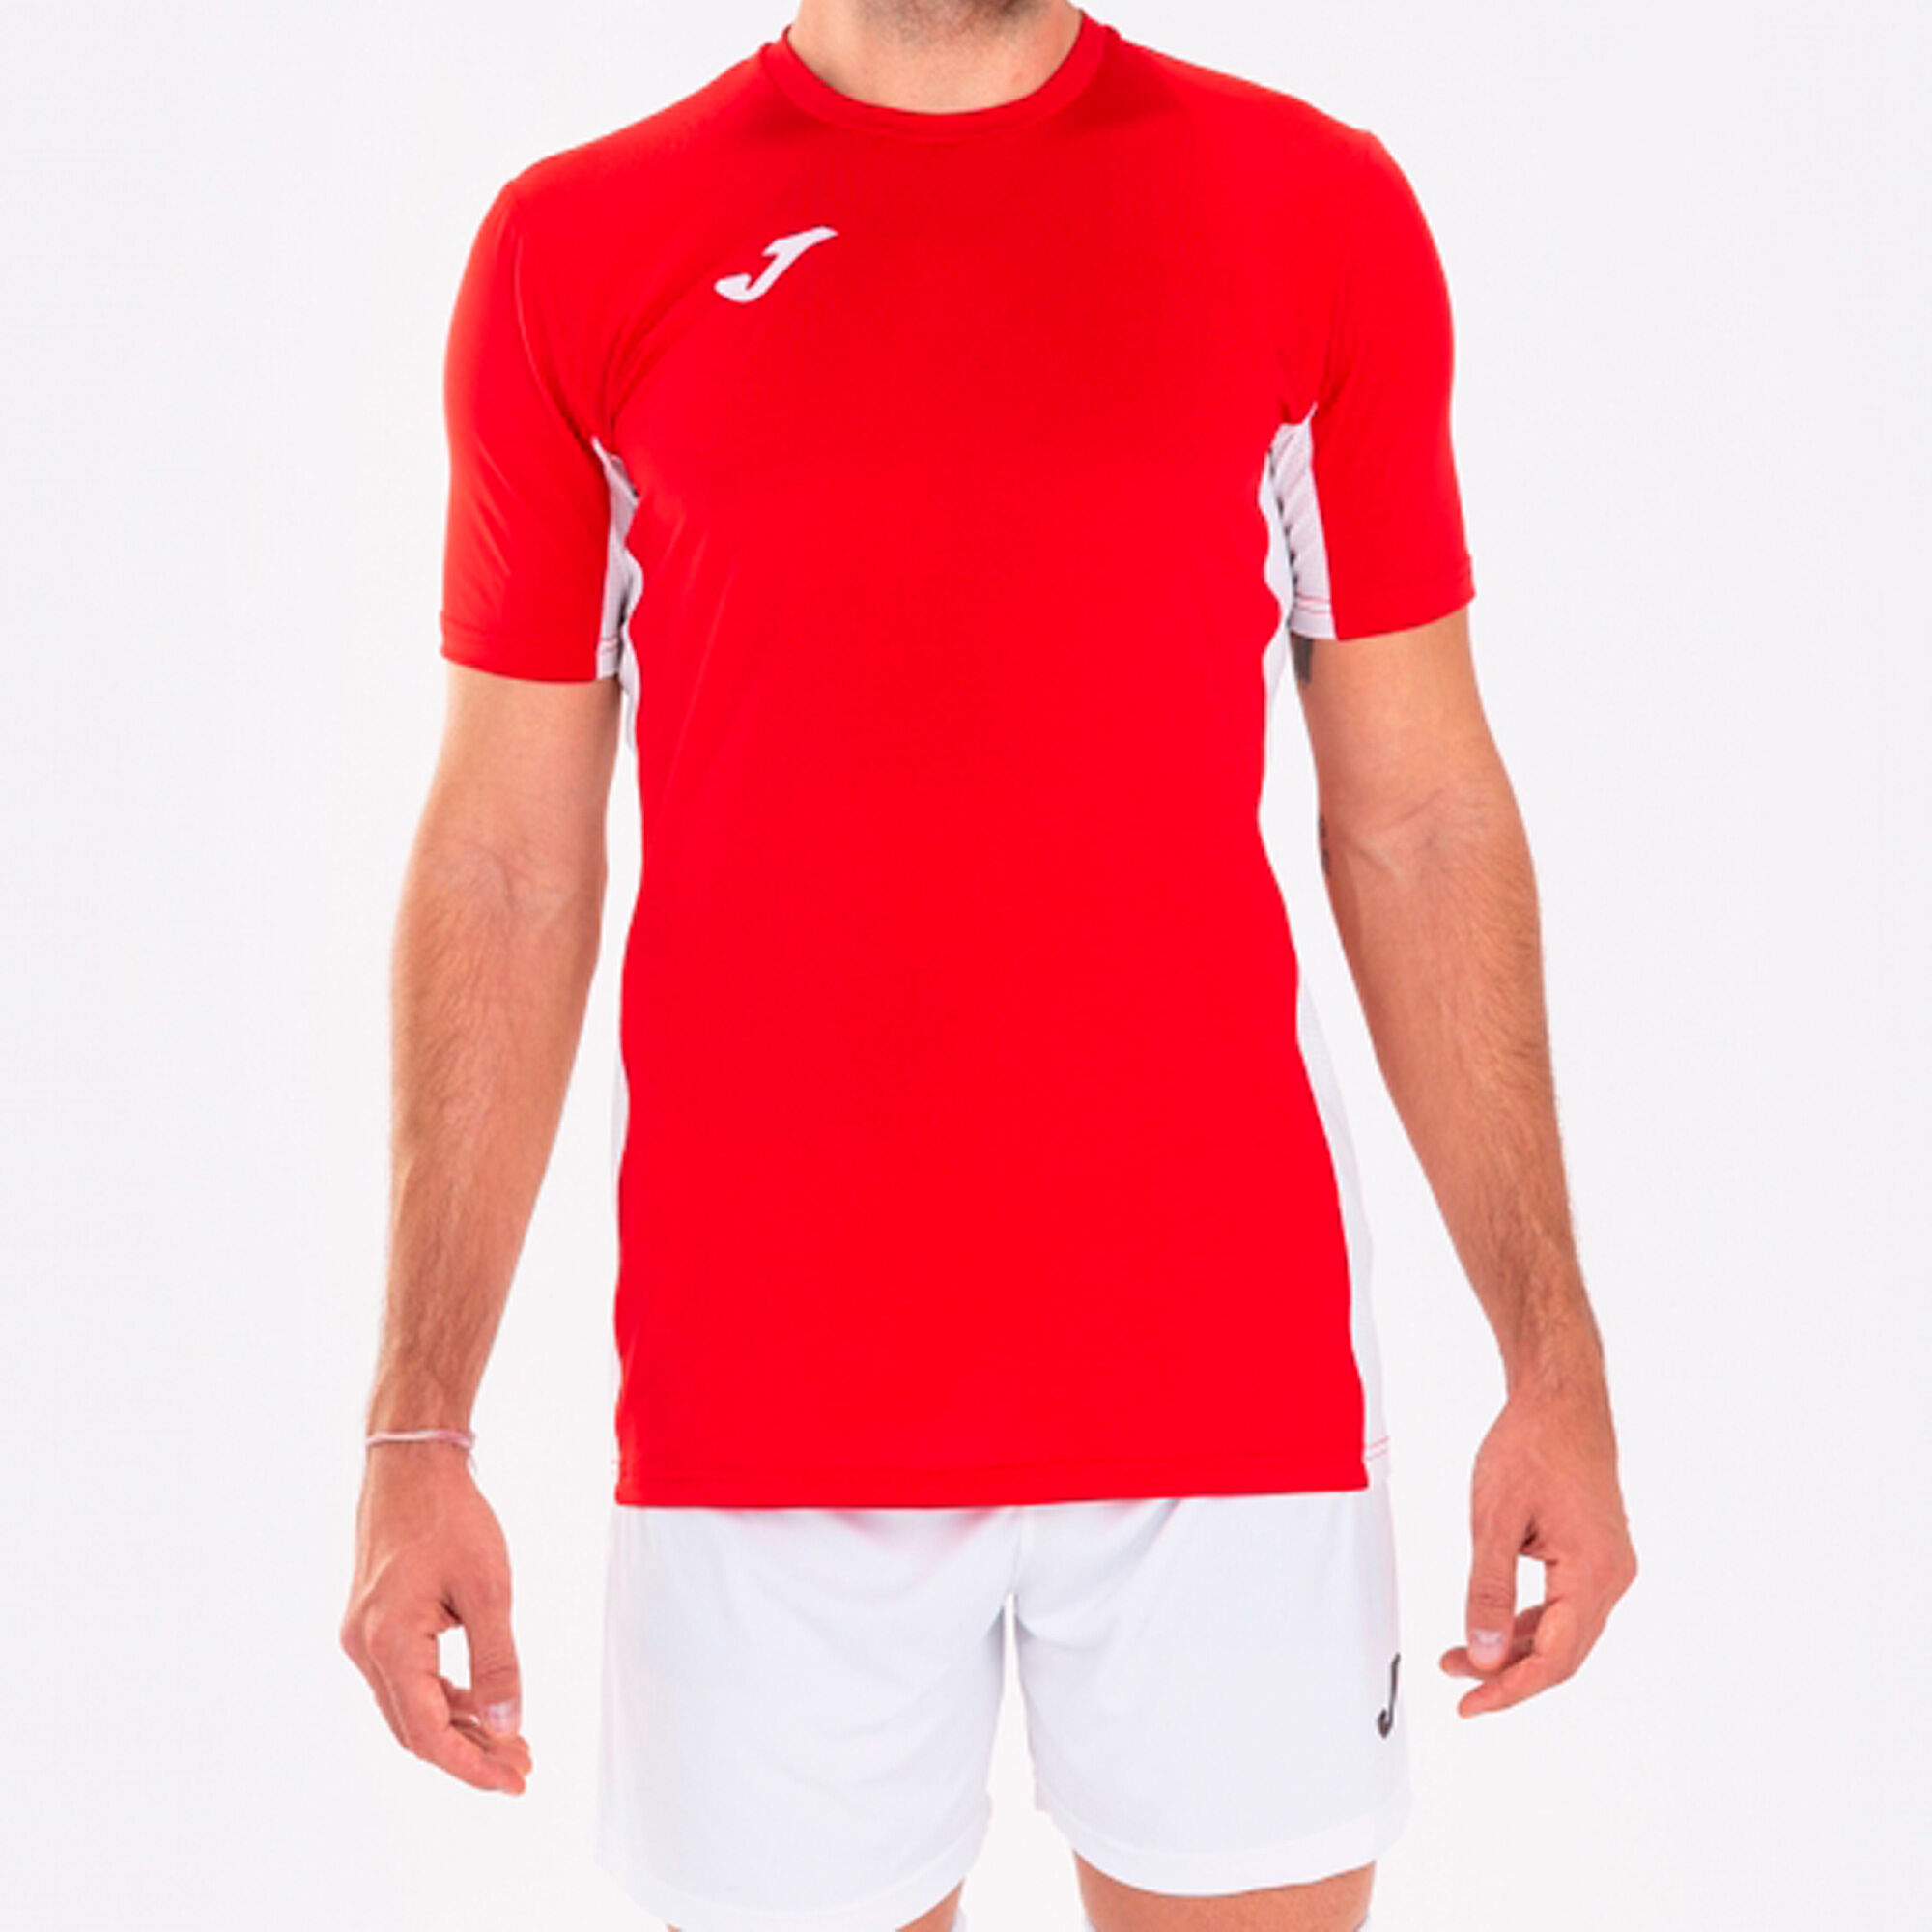 Camiseta manga corta hombre Superliga rojo blanco